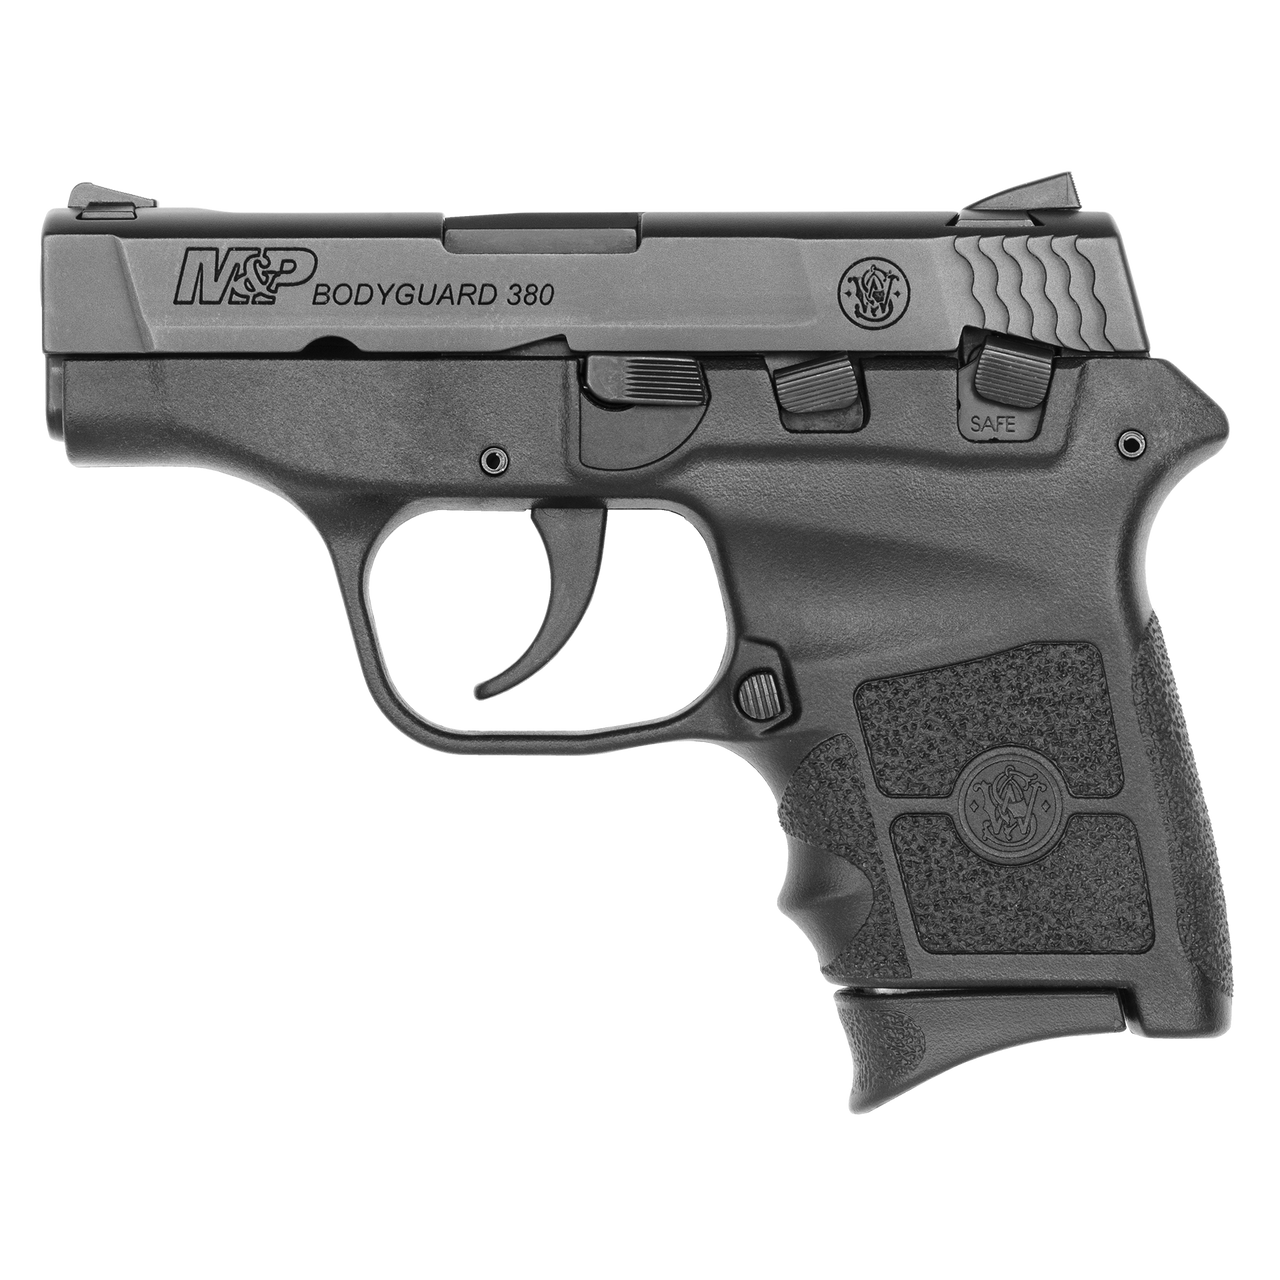 Buy Smith & Wesson M&P Bodyguard 380 Pistol Online